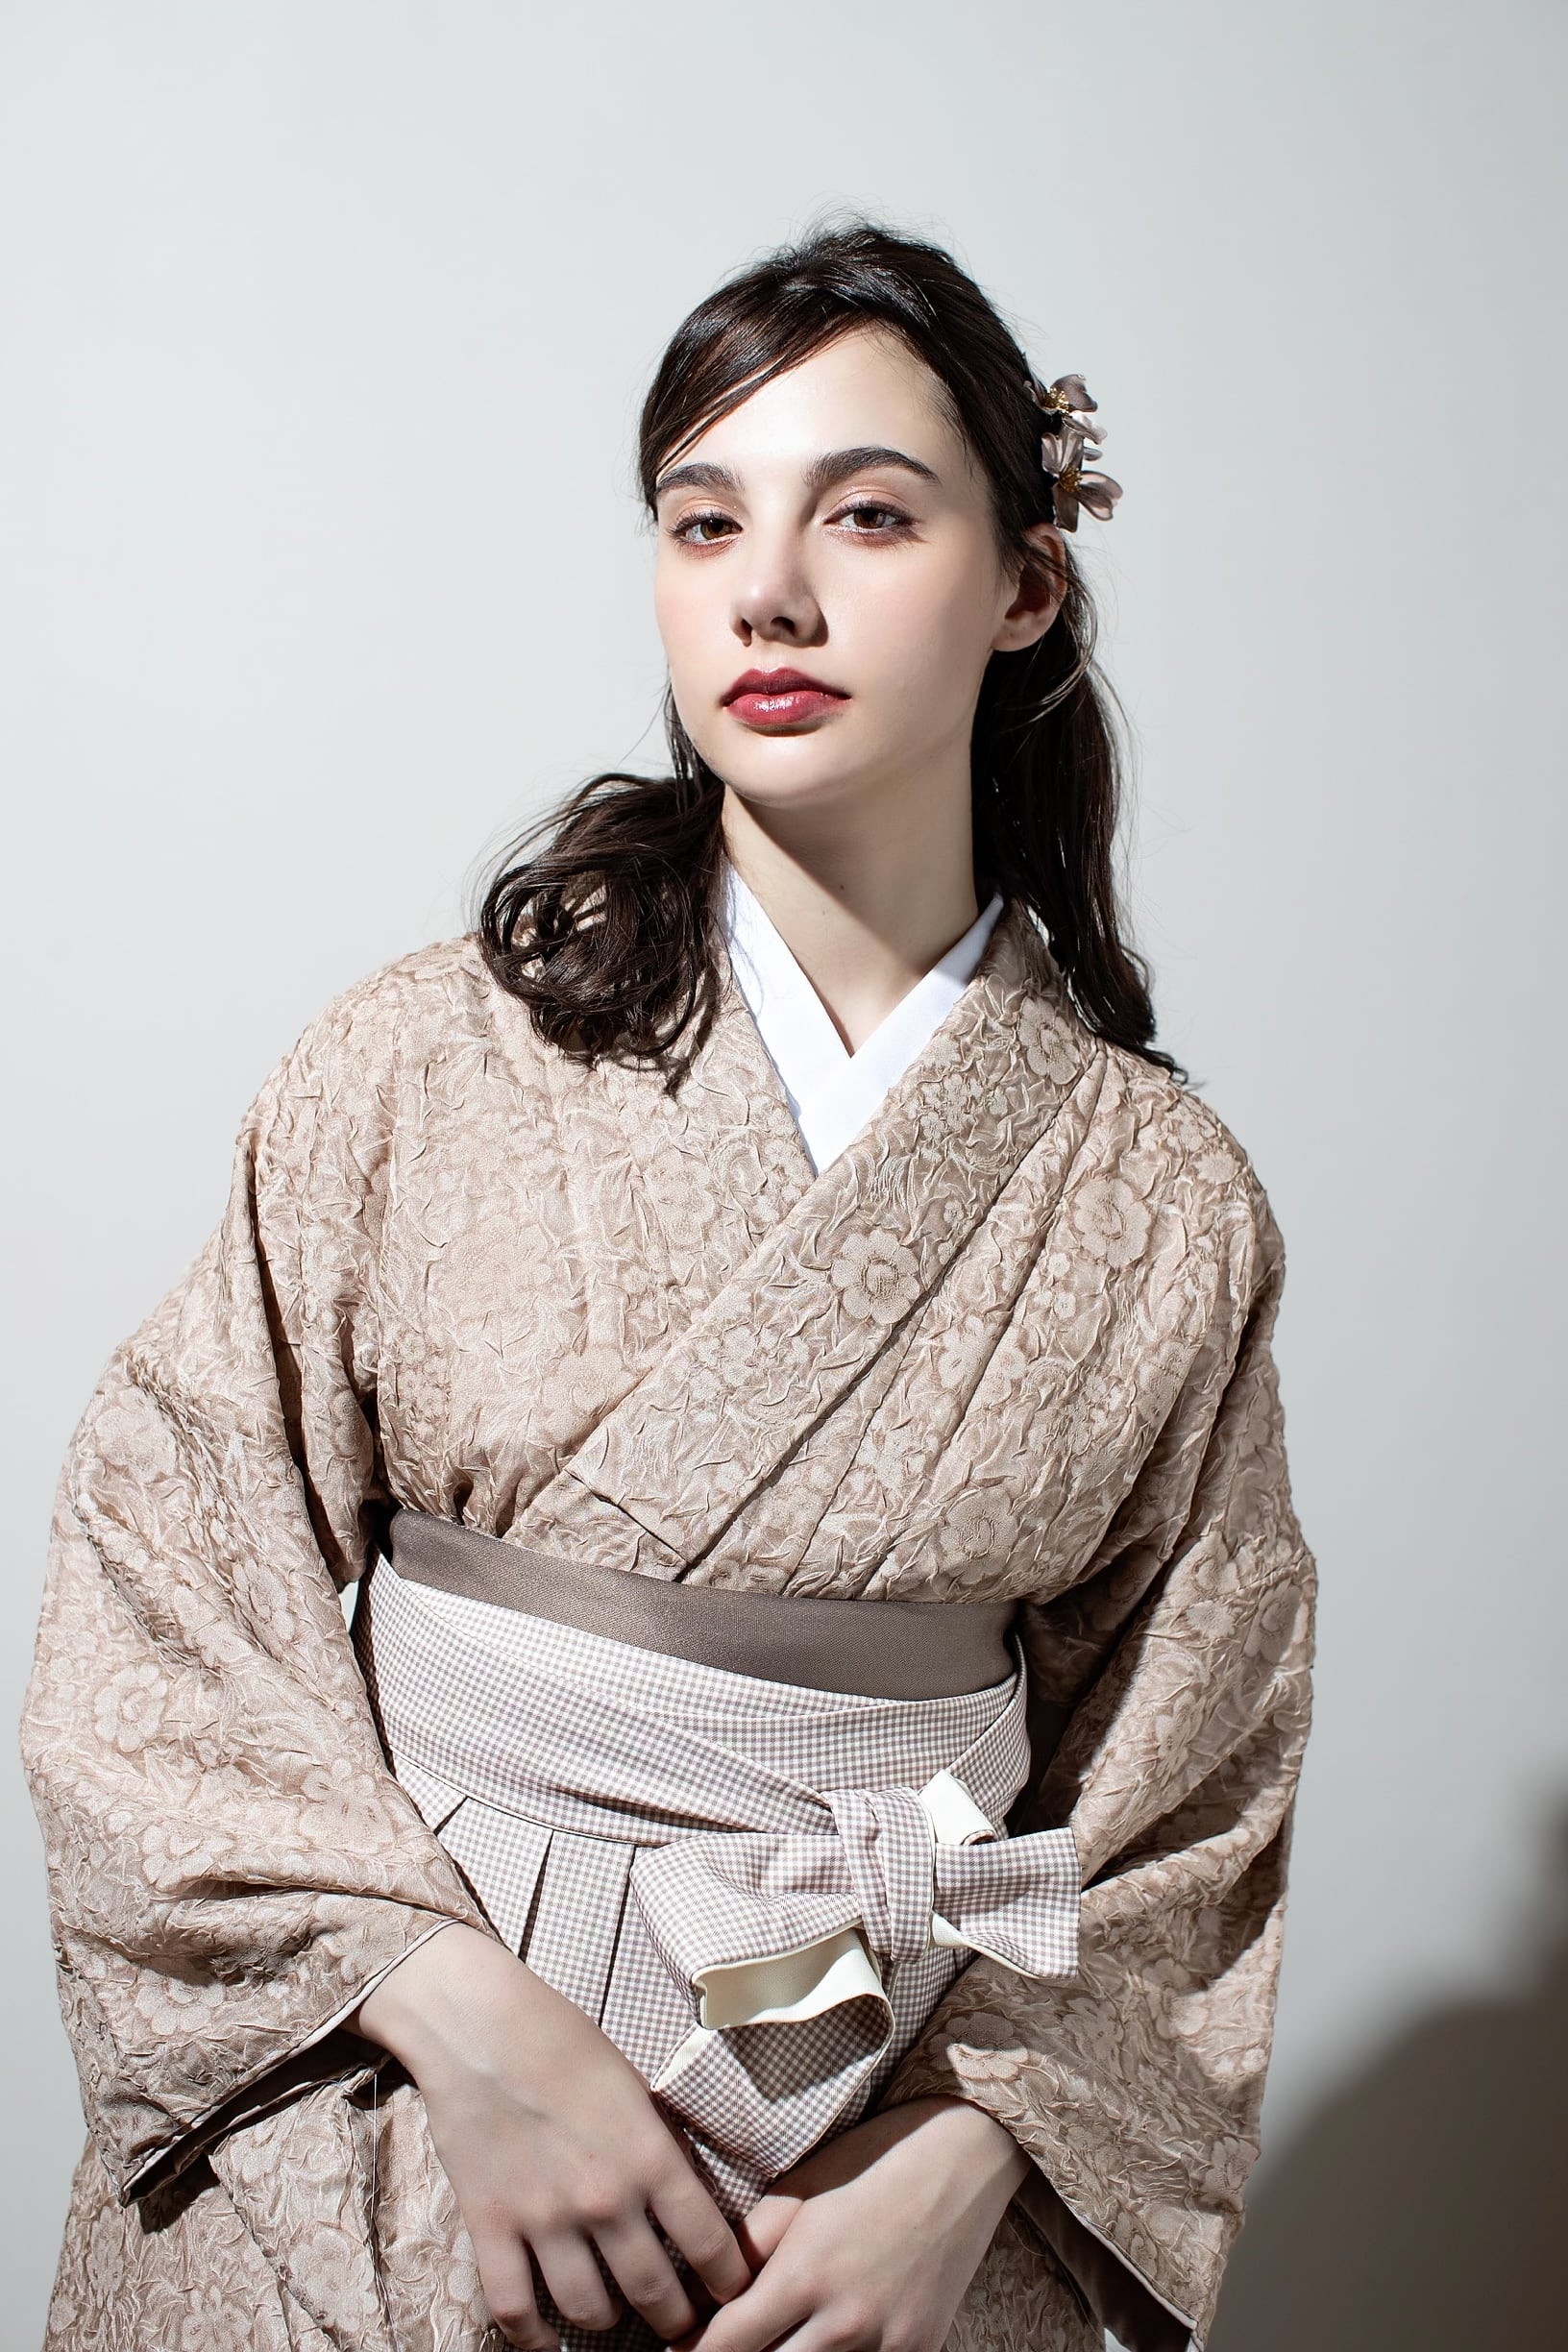 Kimono Sienne 卒業式袴3点セット シフォン素材二尺袖 チェック柄 袴 二尺袖着物 袴 卒業式 | Kimono Sienne